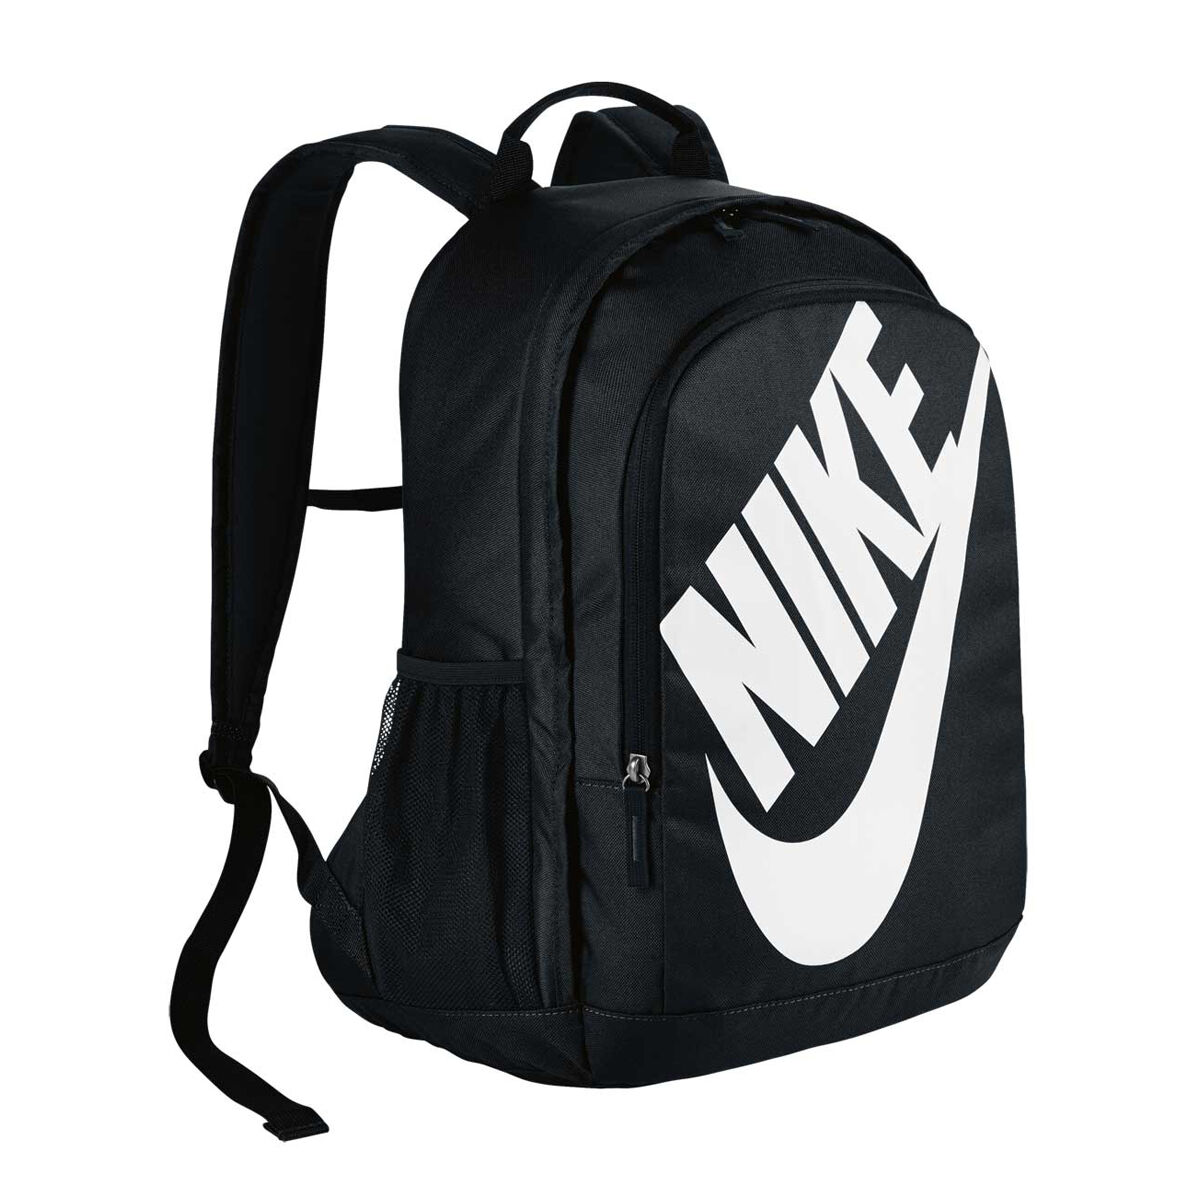 nike amazing black backpack